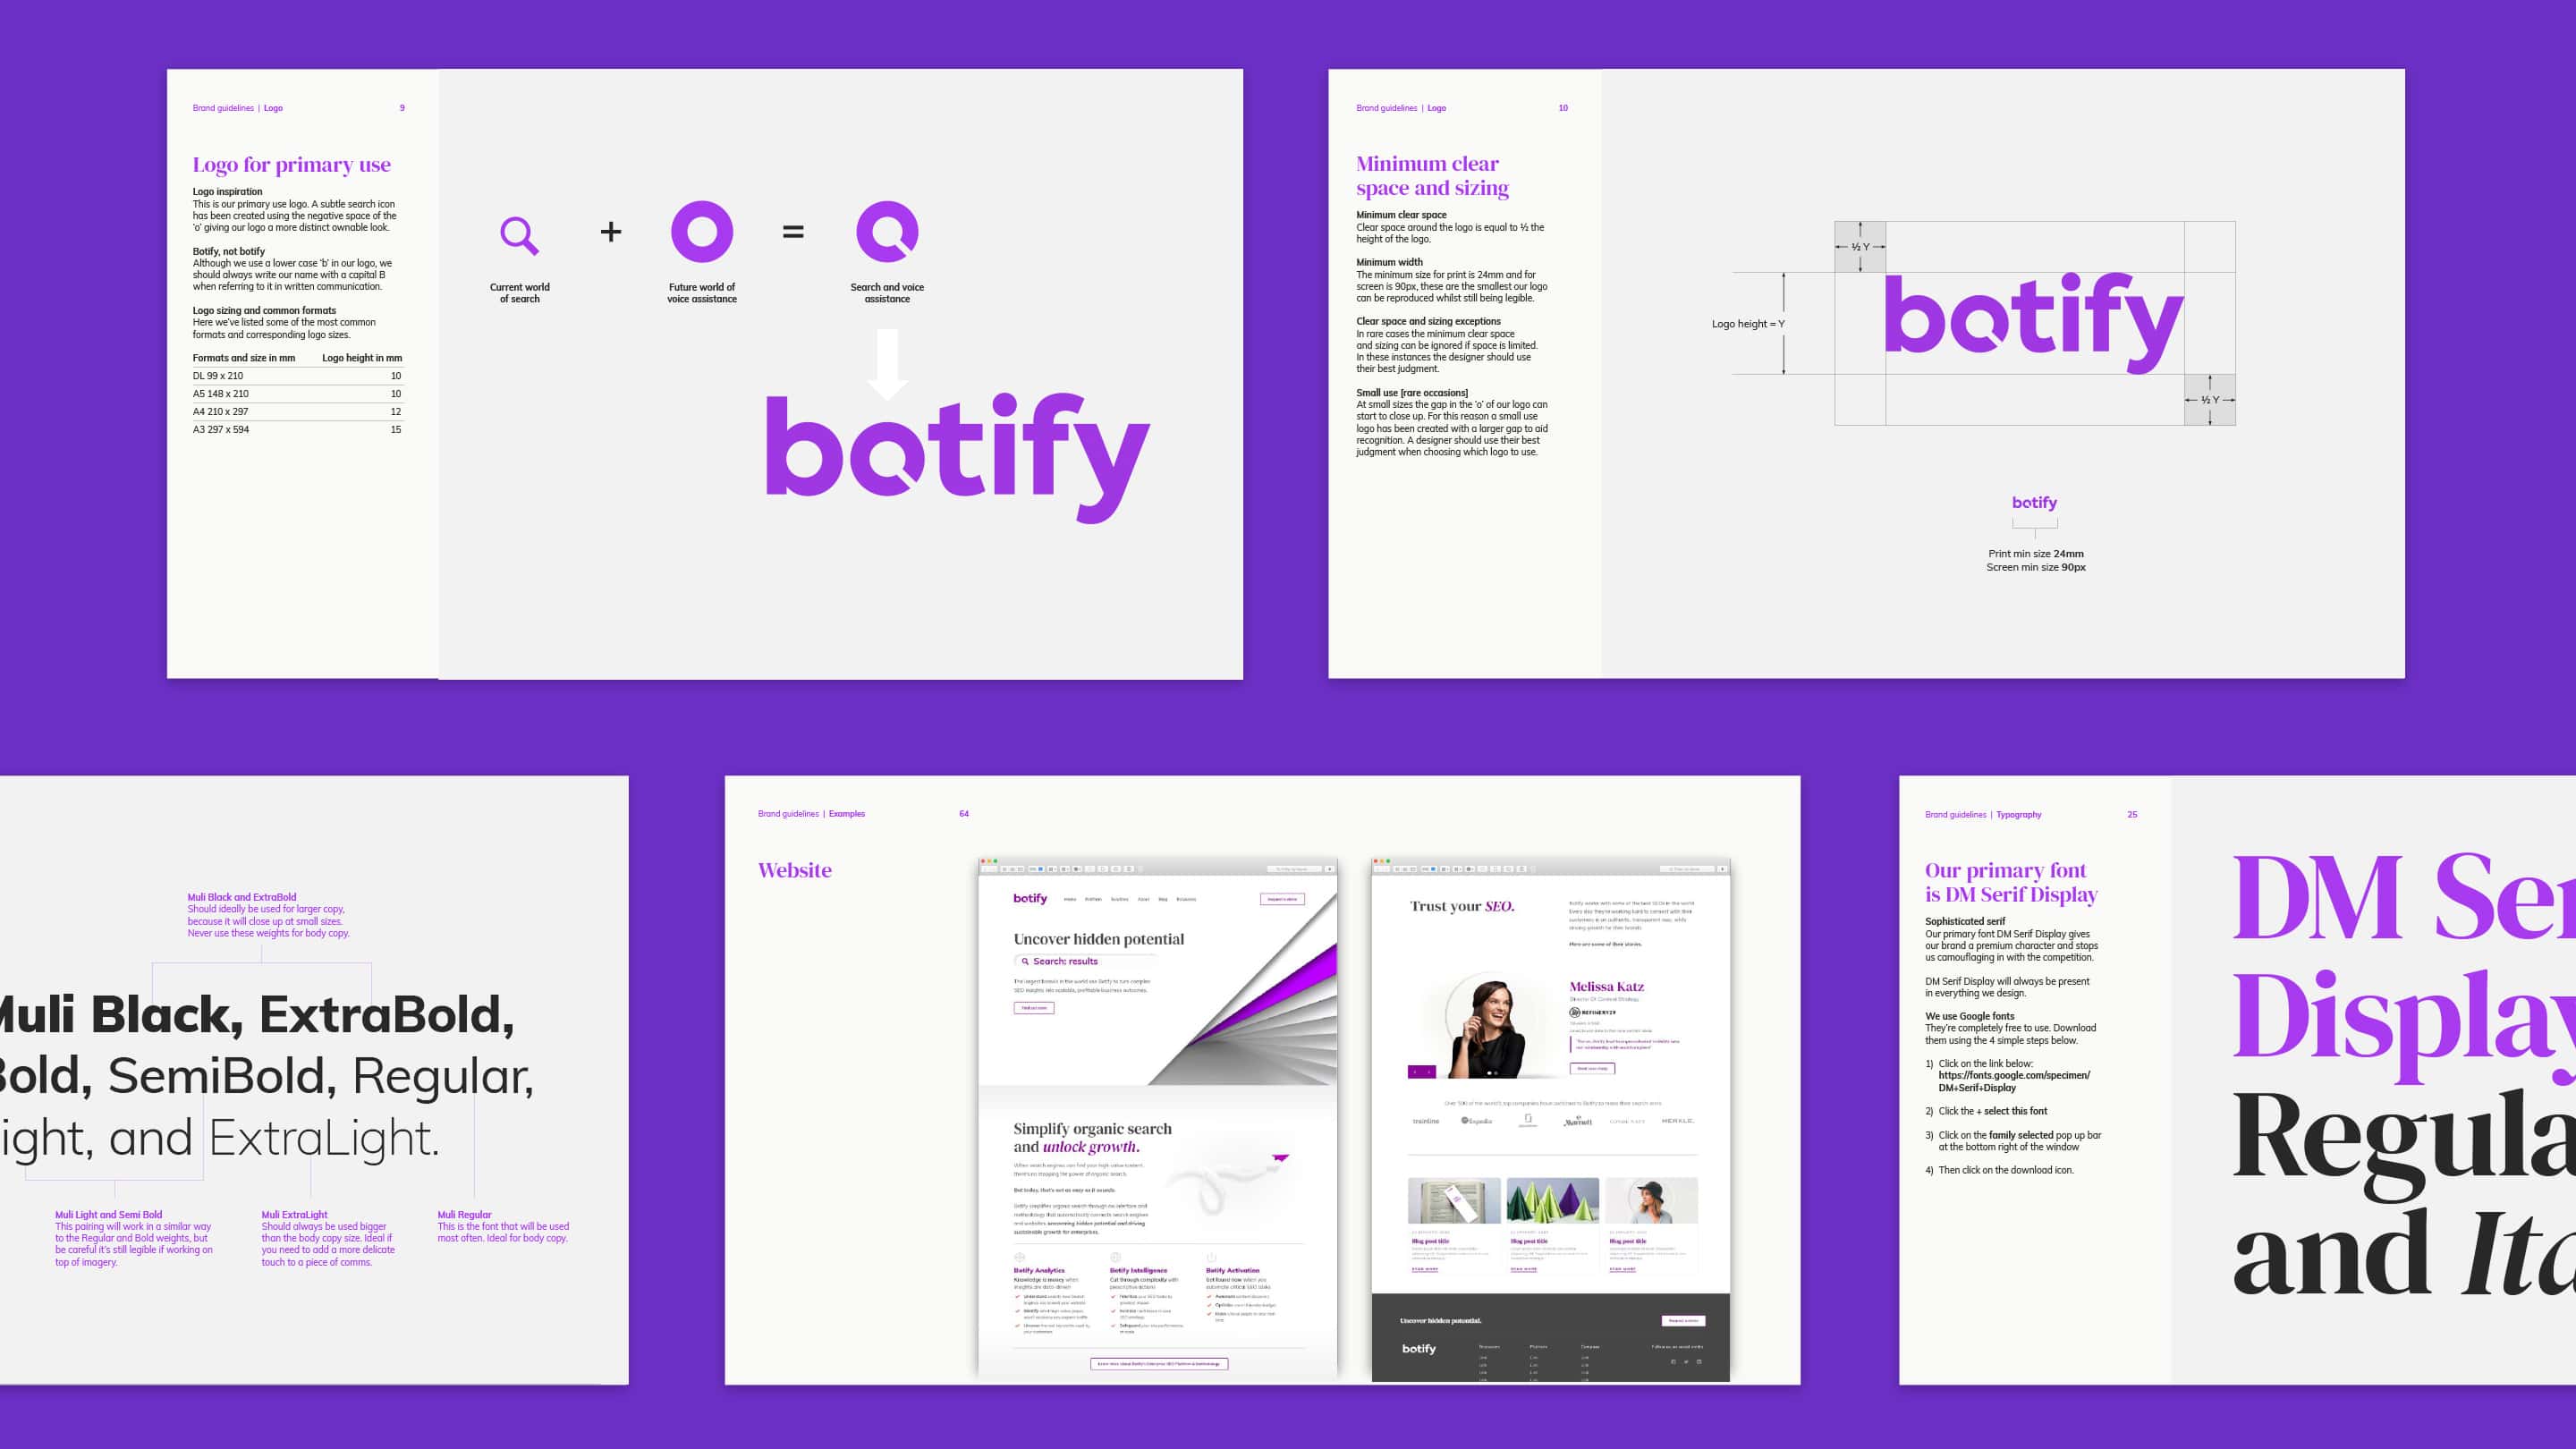 Botify_Full-width-image-4